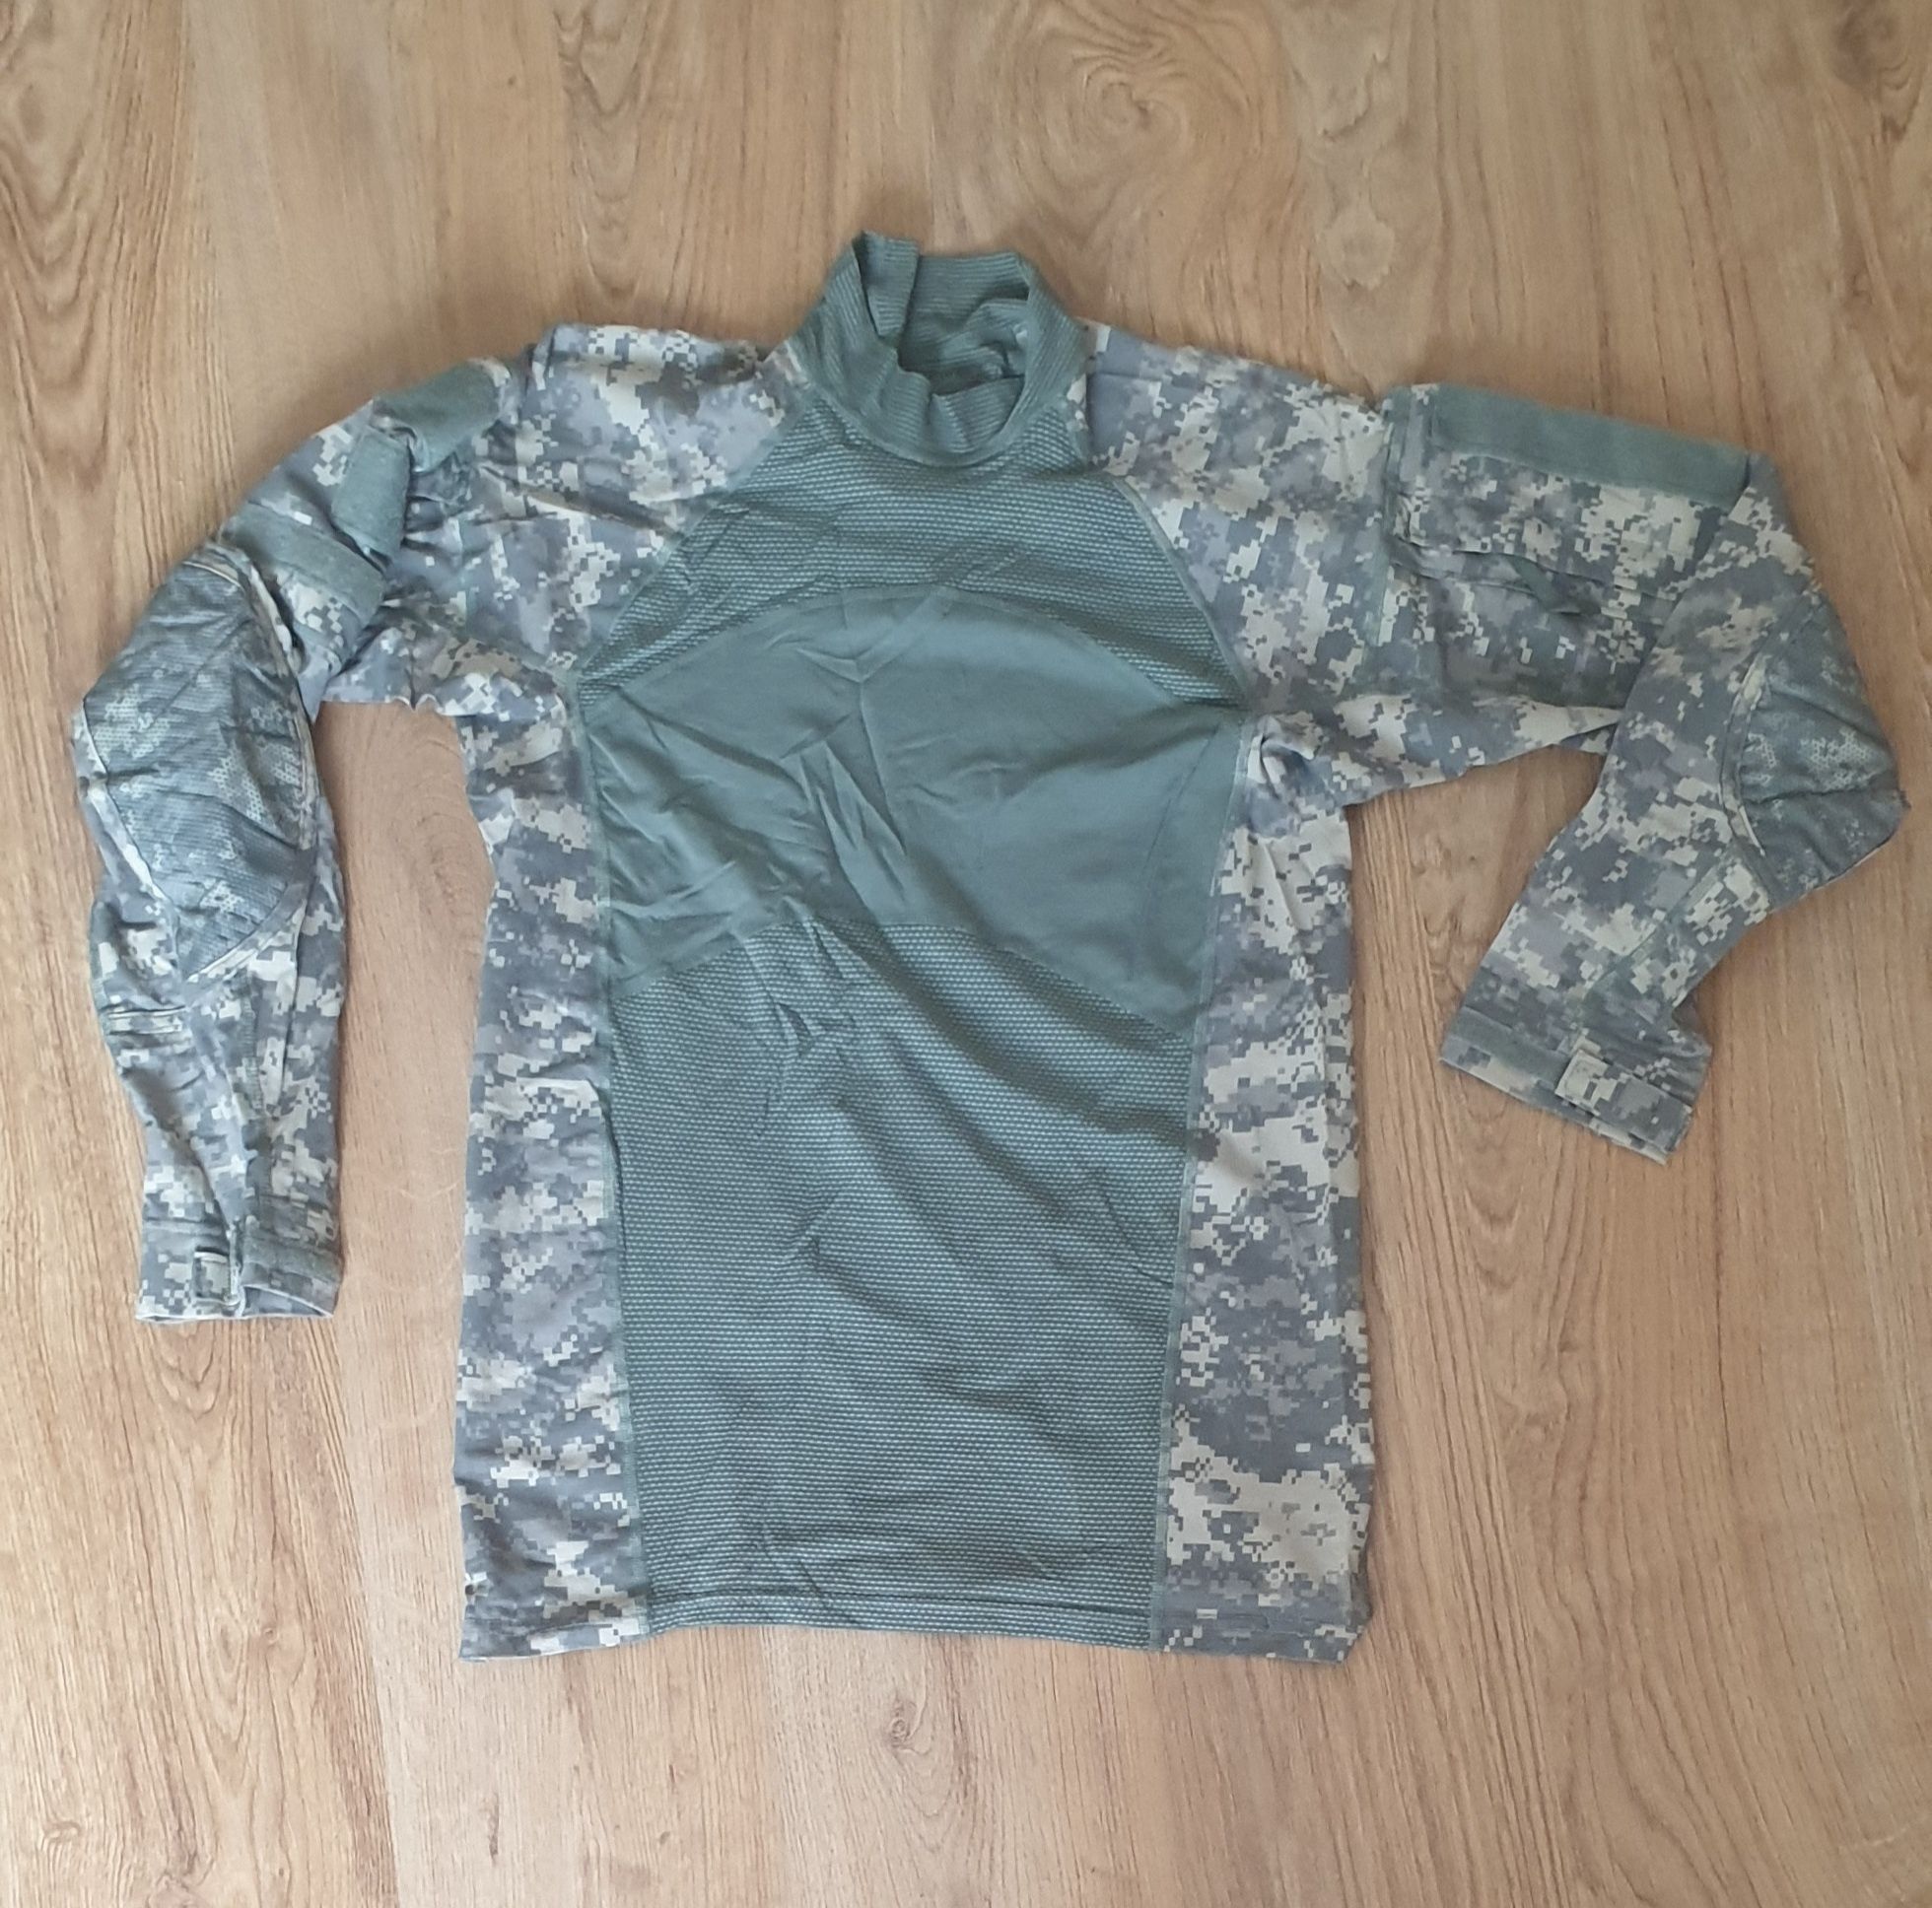 Bluza massif combat shirt ACU / UPC us army.